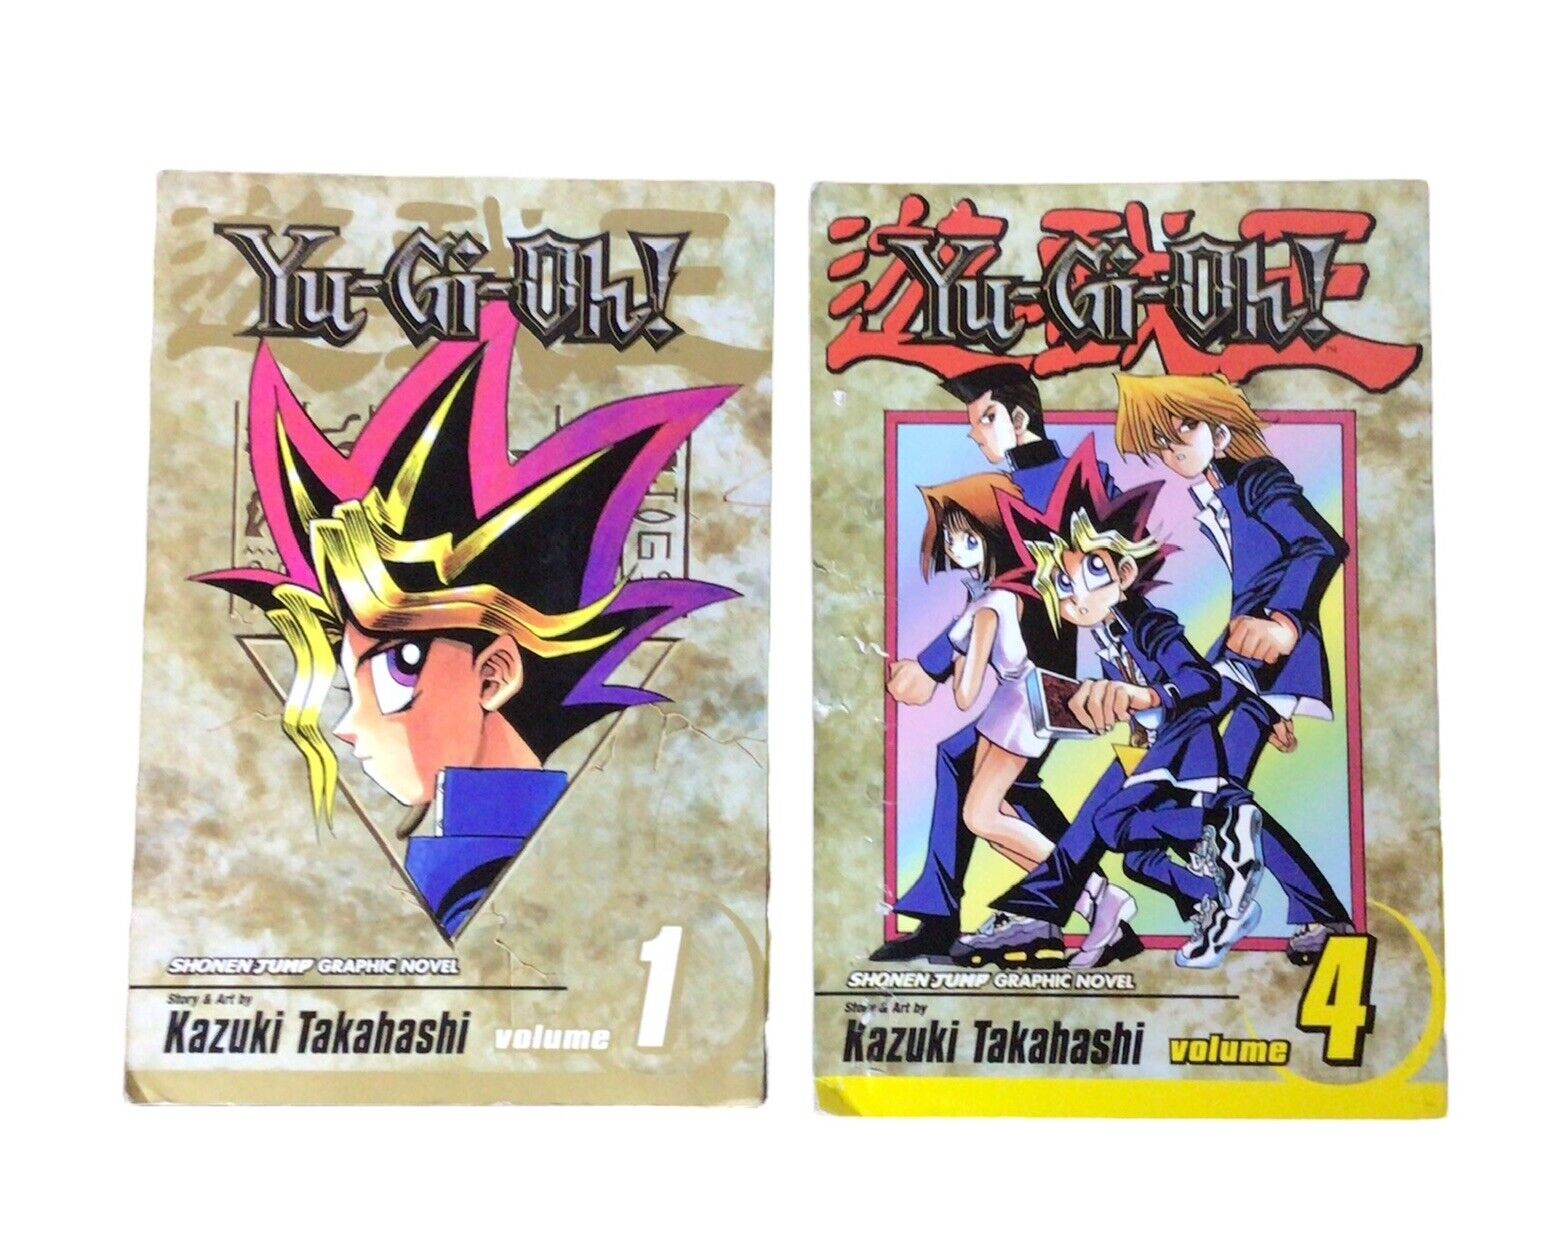 YU-GI-OH VOLUME 1 & 4 Kazuki Takahashi, Shonen Jump Graphic Novel Manga English